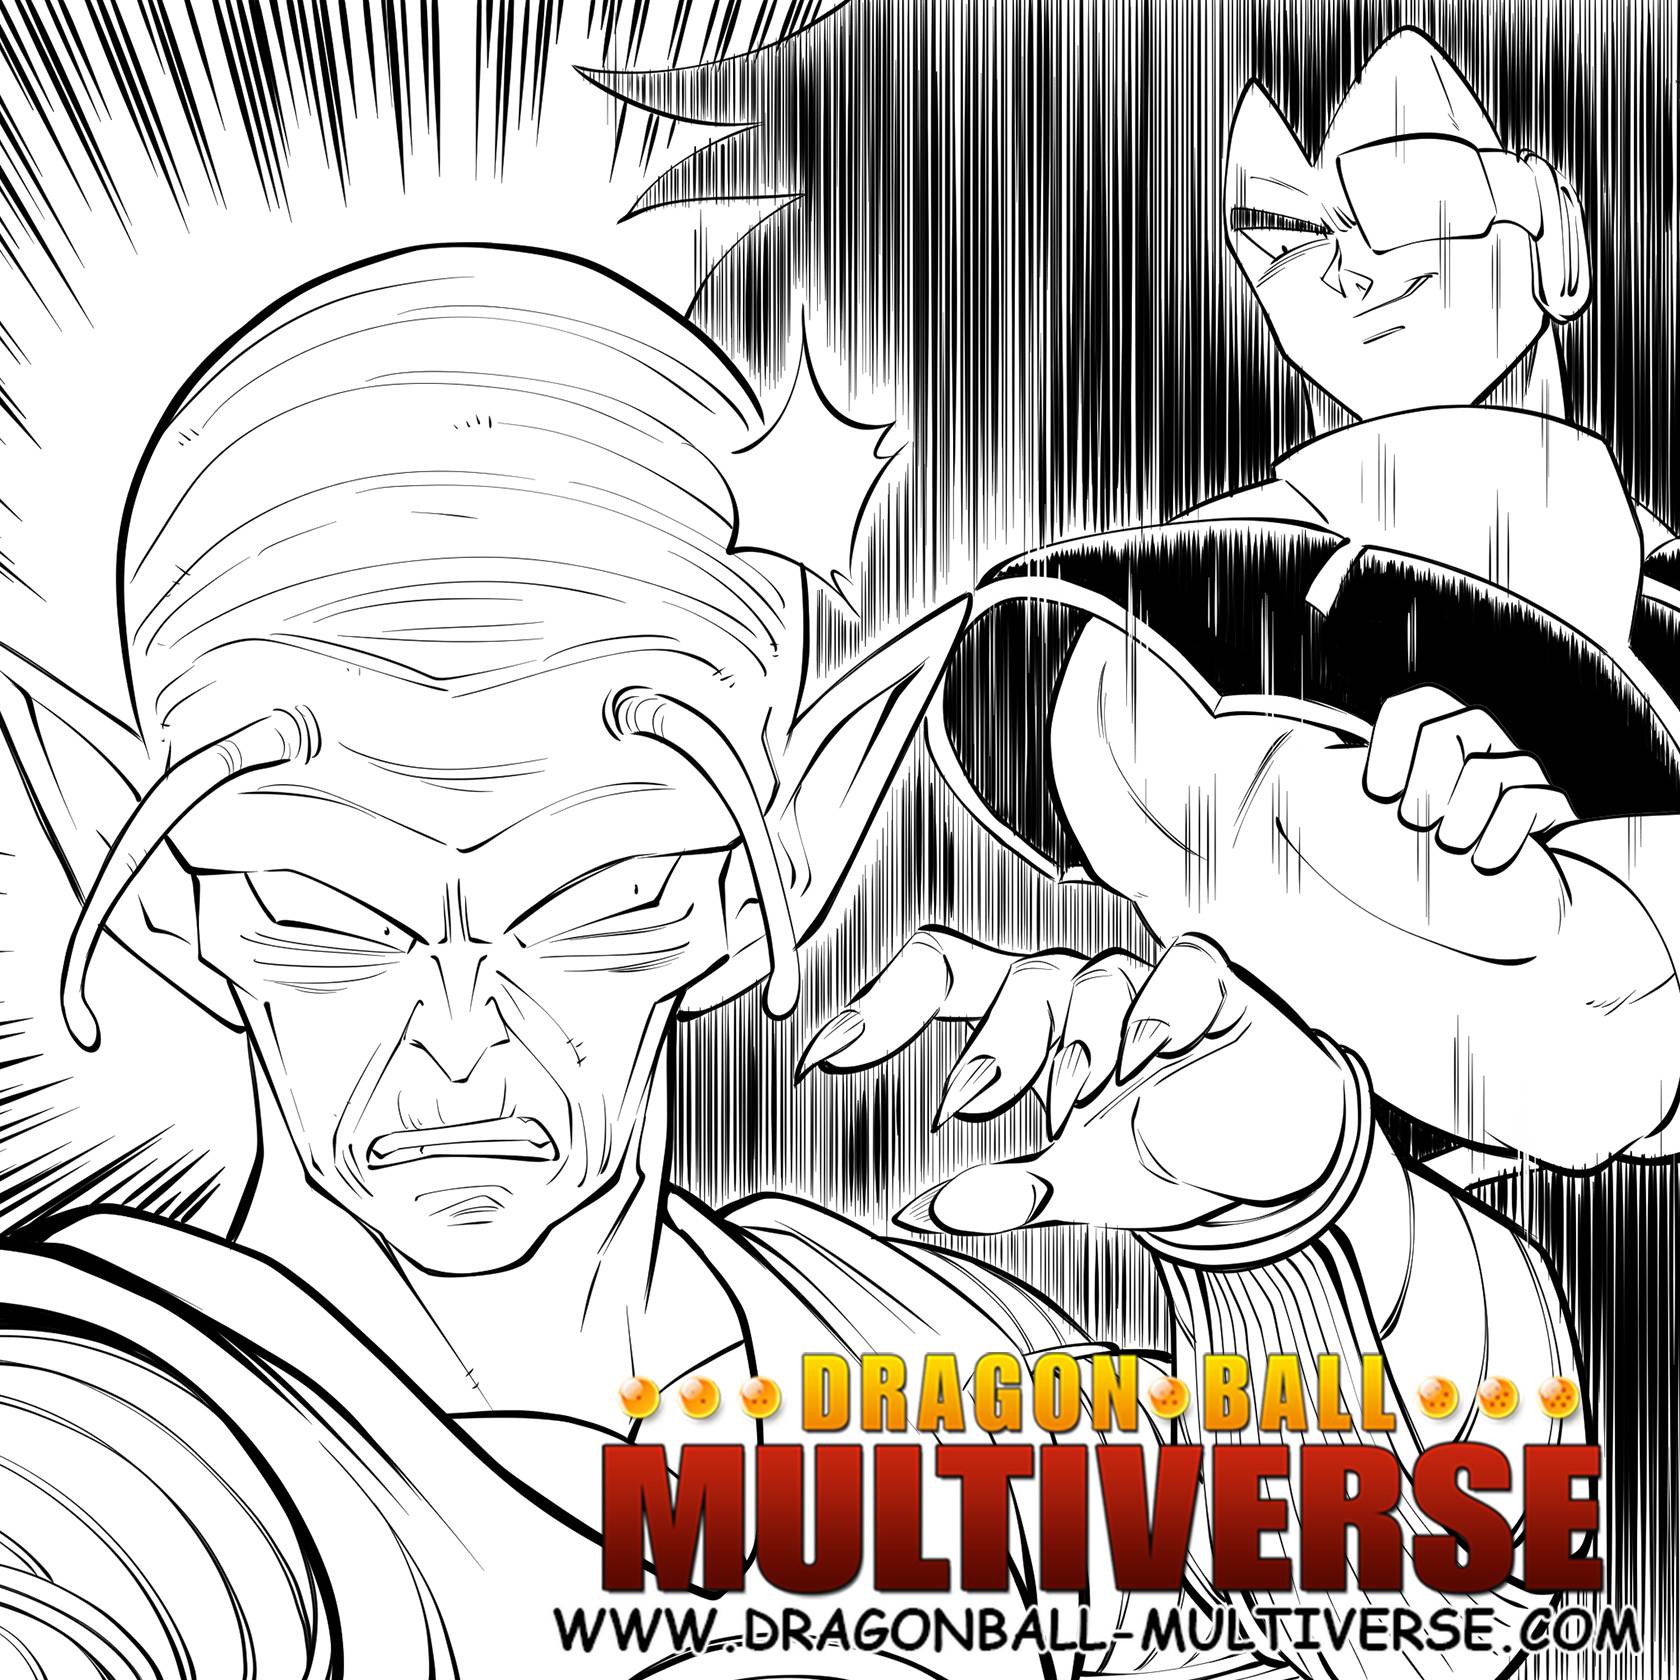 Dragon Ball Multiverse on X: Look at my power ! / Admirez ma puissance !  >NEW DBM PAGE : 1397  #dbz #manga #doujinshi #fanfic  #dragonballz #webcomic #piccolo #DBMultiverse  / X